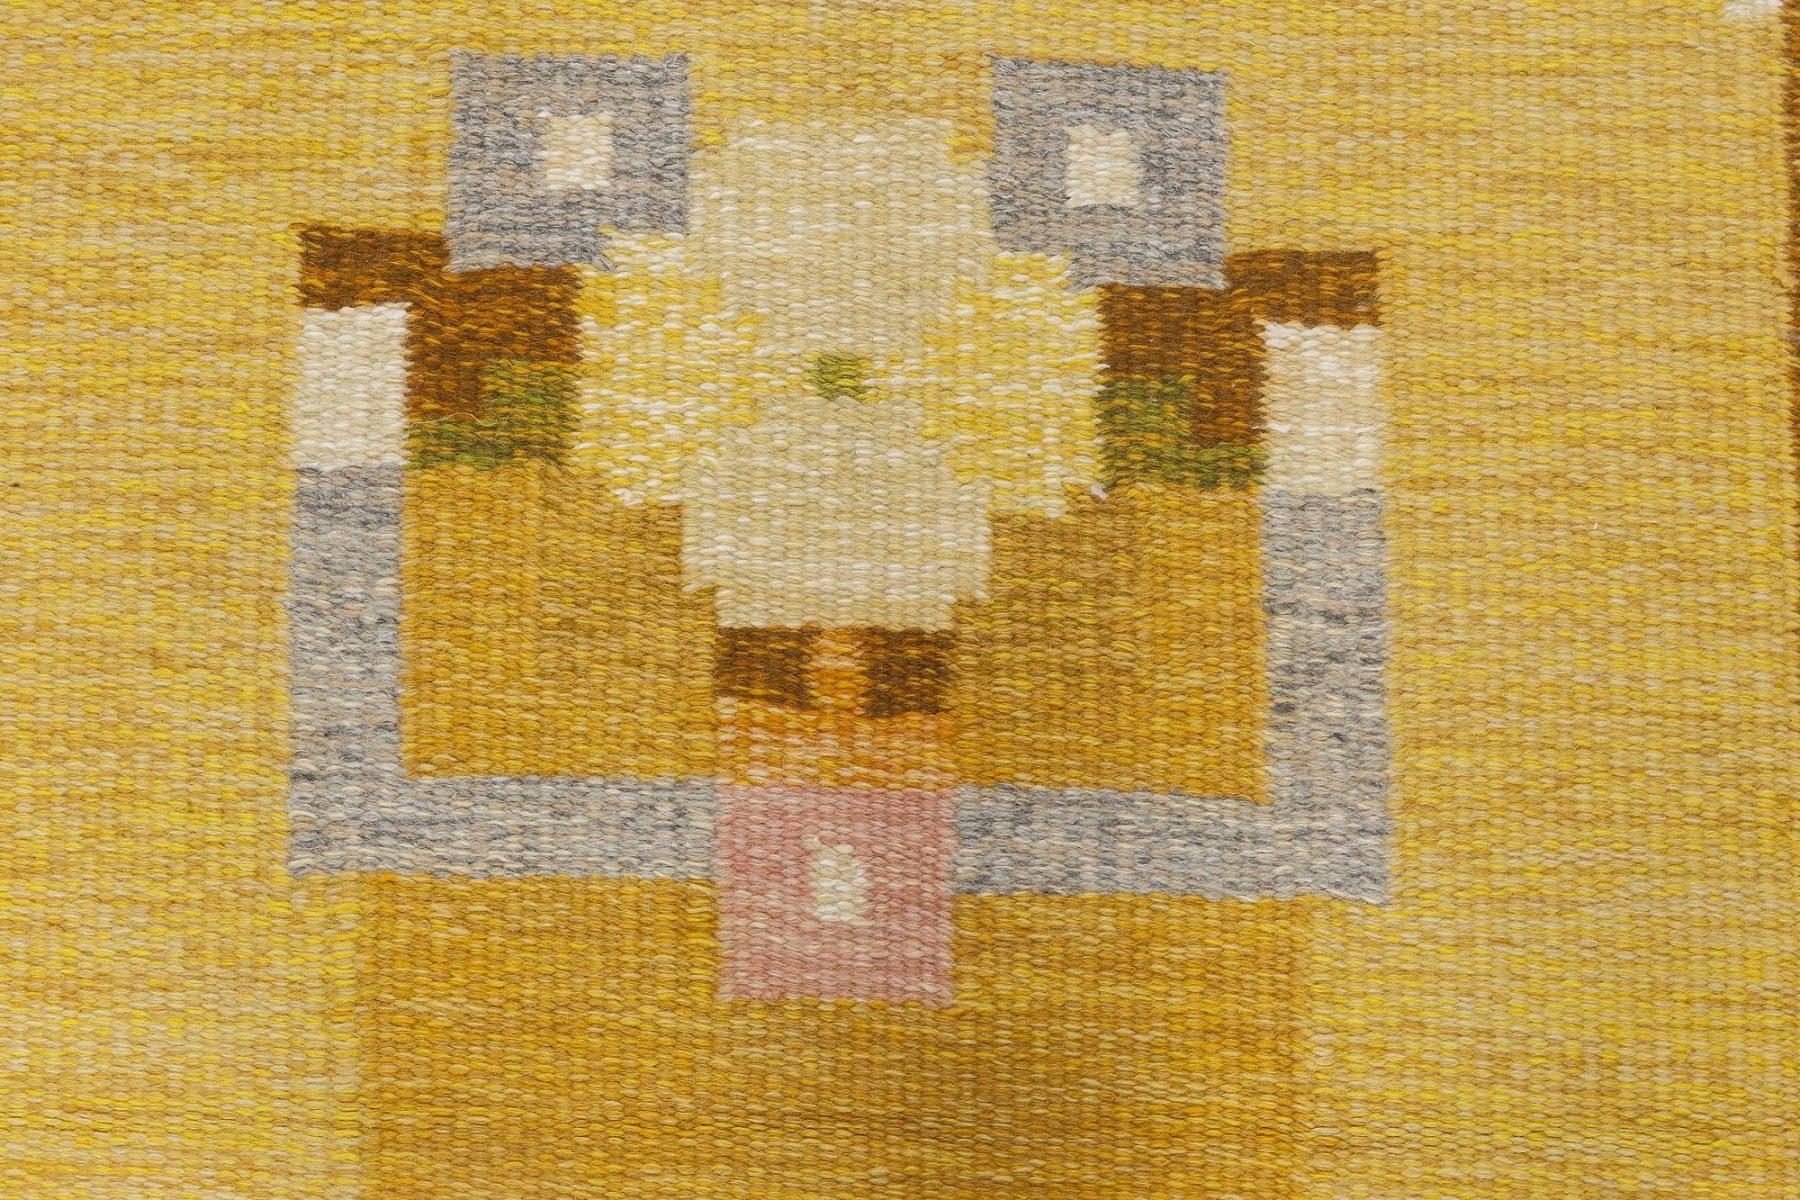 Mid-20th century Swedish yellow flat-weave wool rug signed by Ingegerd Silow at Doris Leslie Blau
Size: 5'6